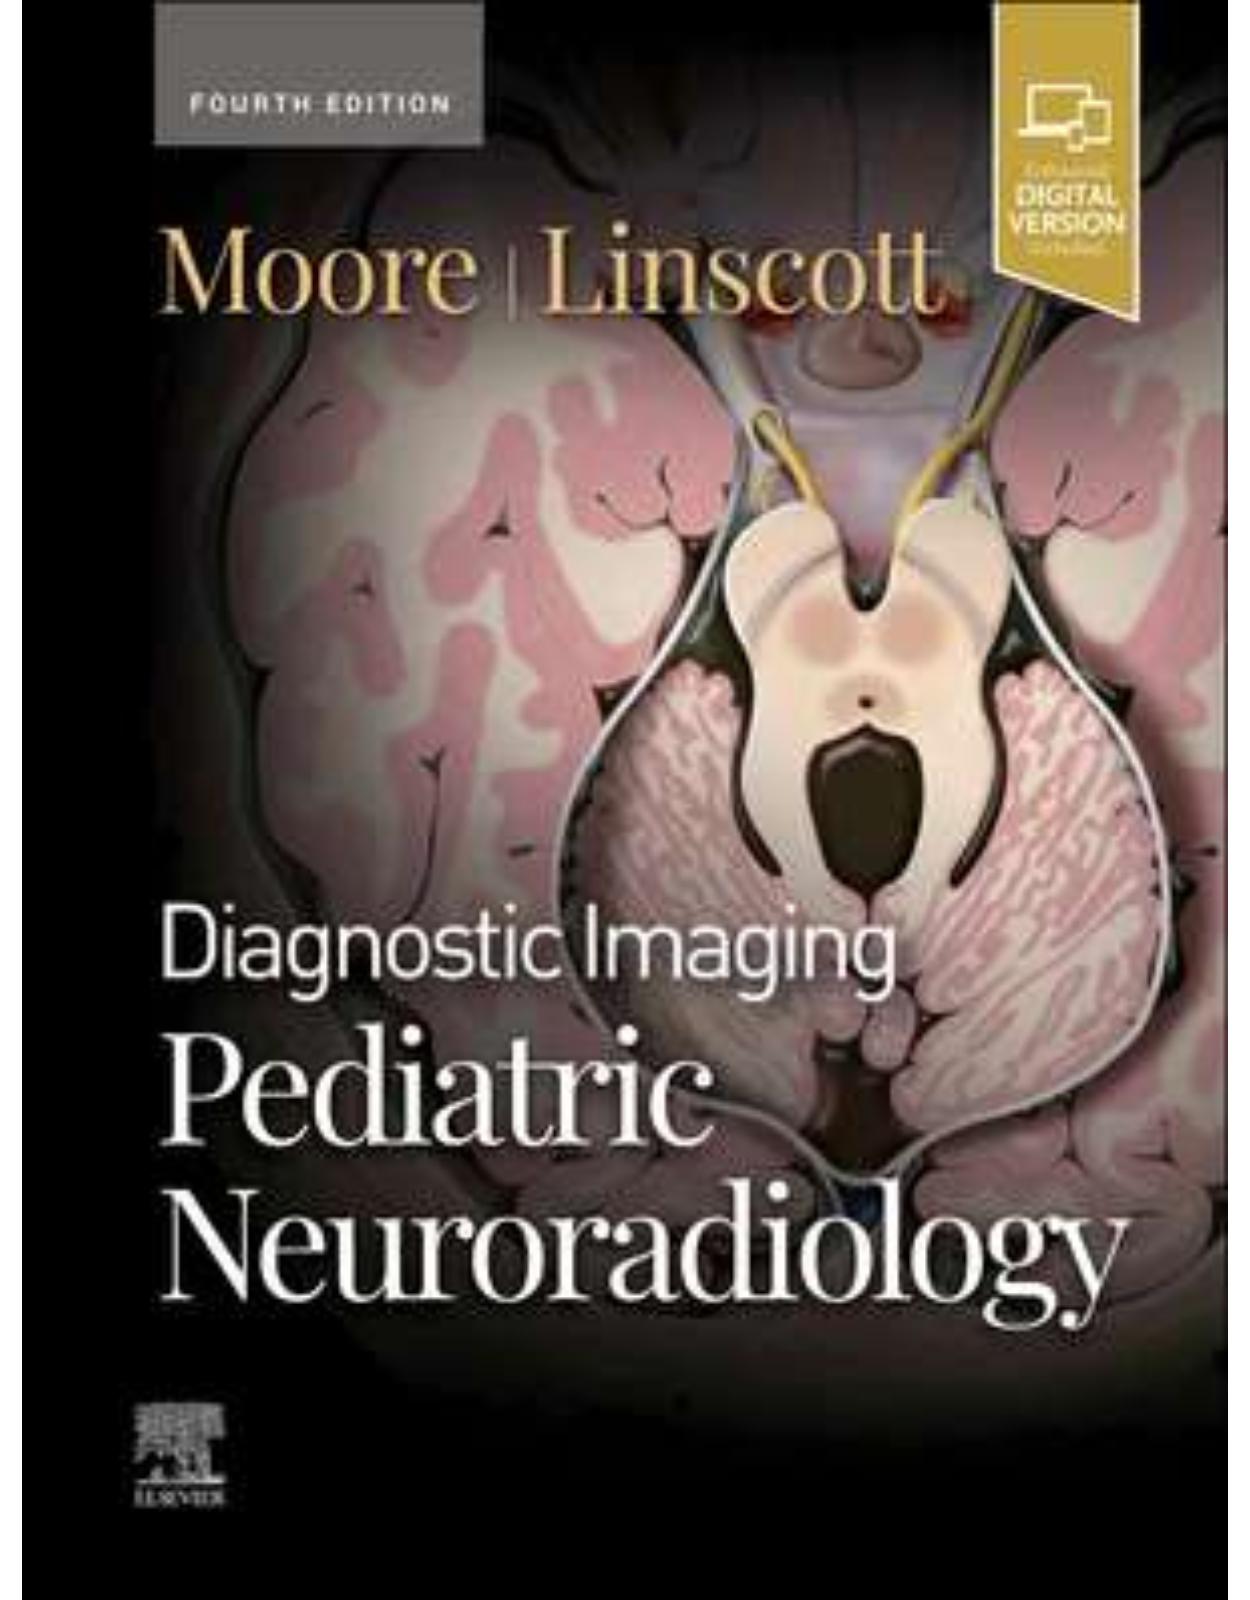 Diagnostic Imaging: Pediatric Neuroradiology,Fourth Edition